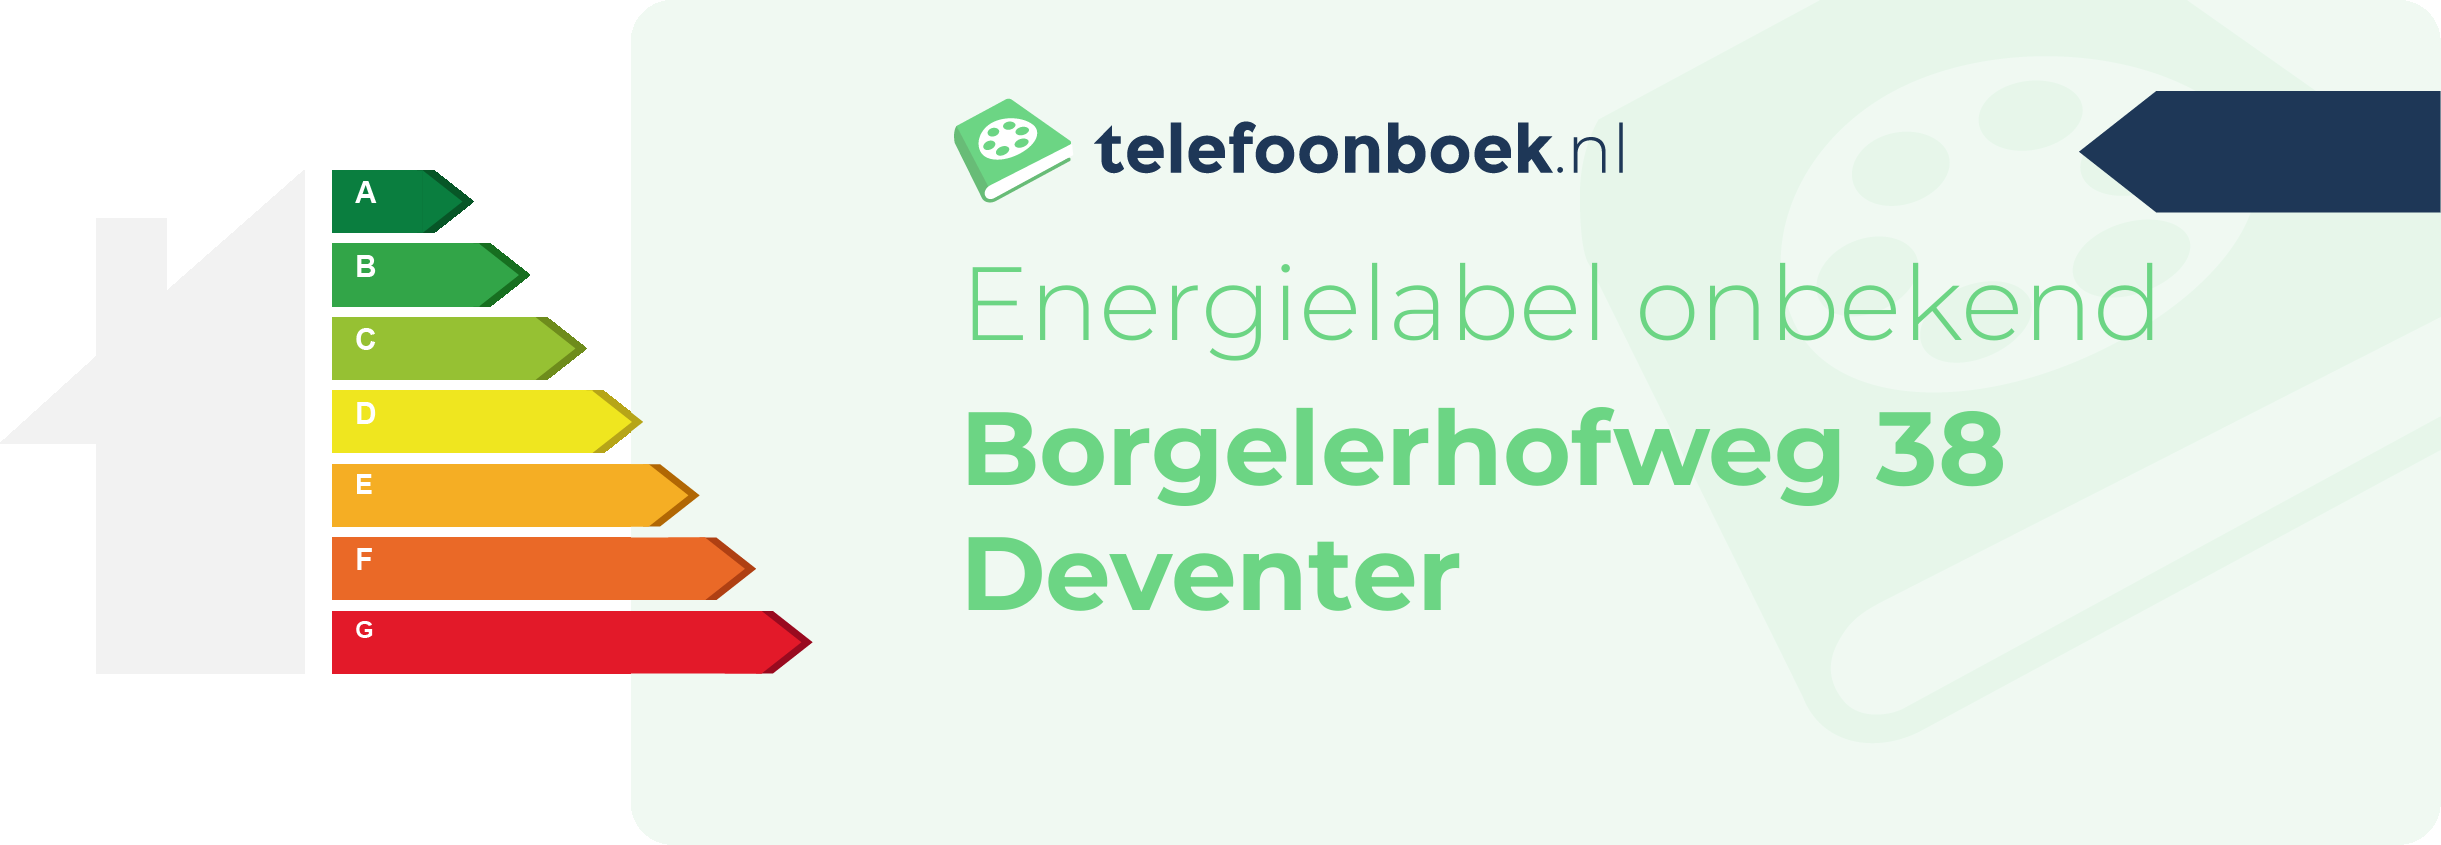 Energielabel Borgelerhofweg 38 Deventer